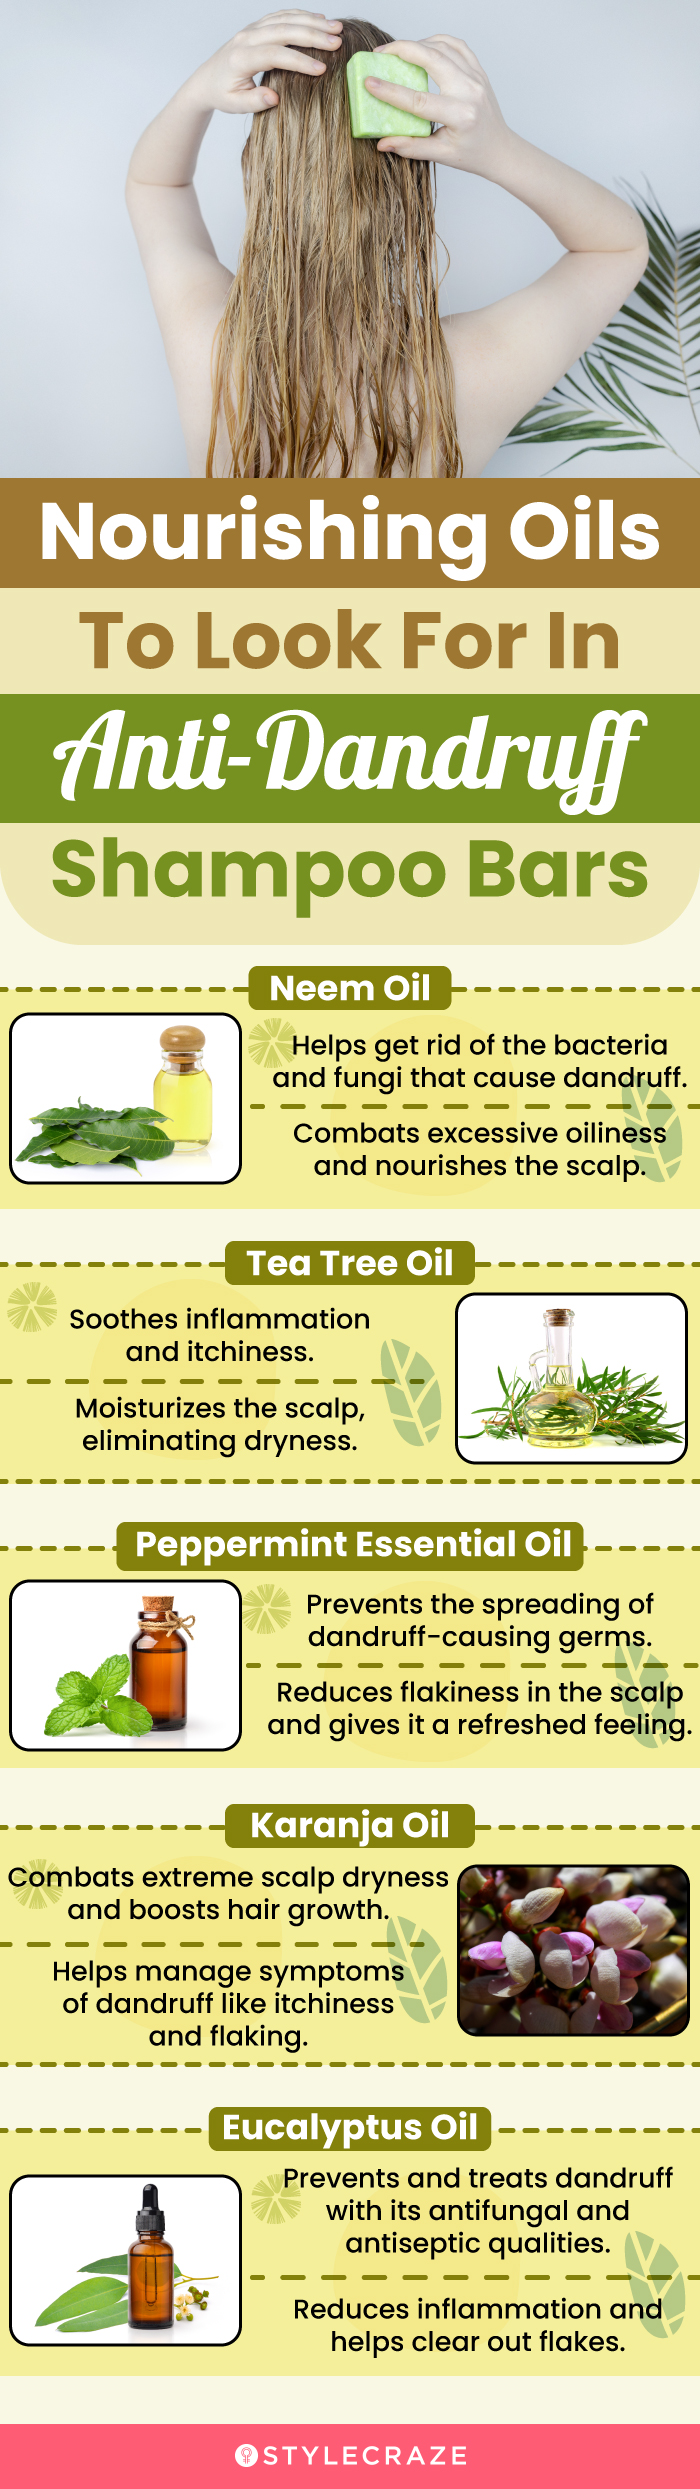 Nourishing Oils To Look For In Dandruff Shampoo Bars (infographic)